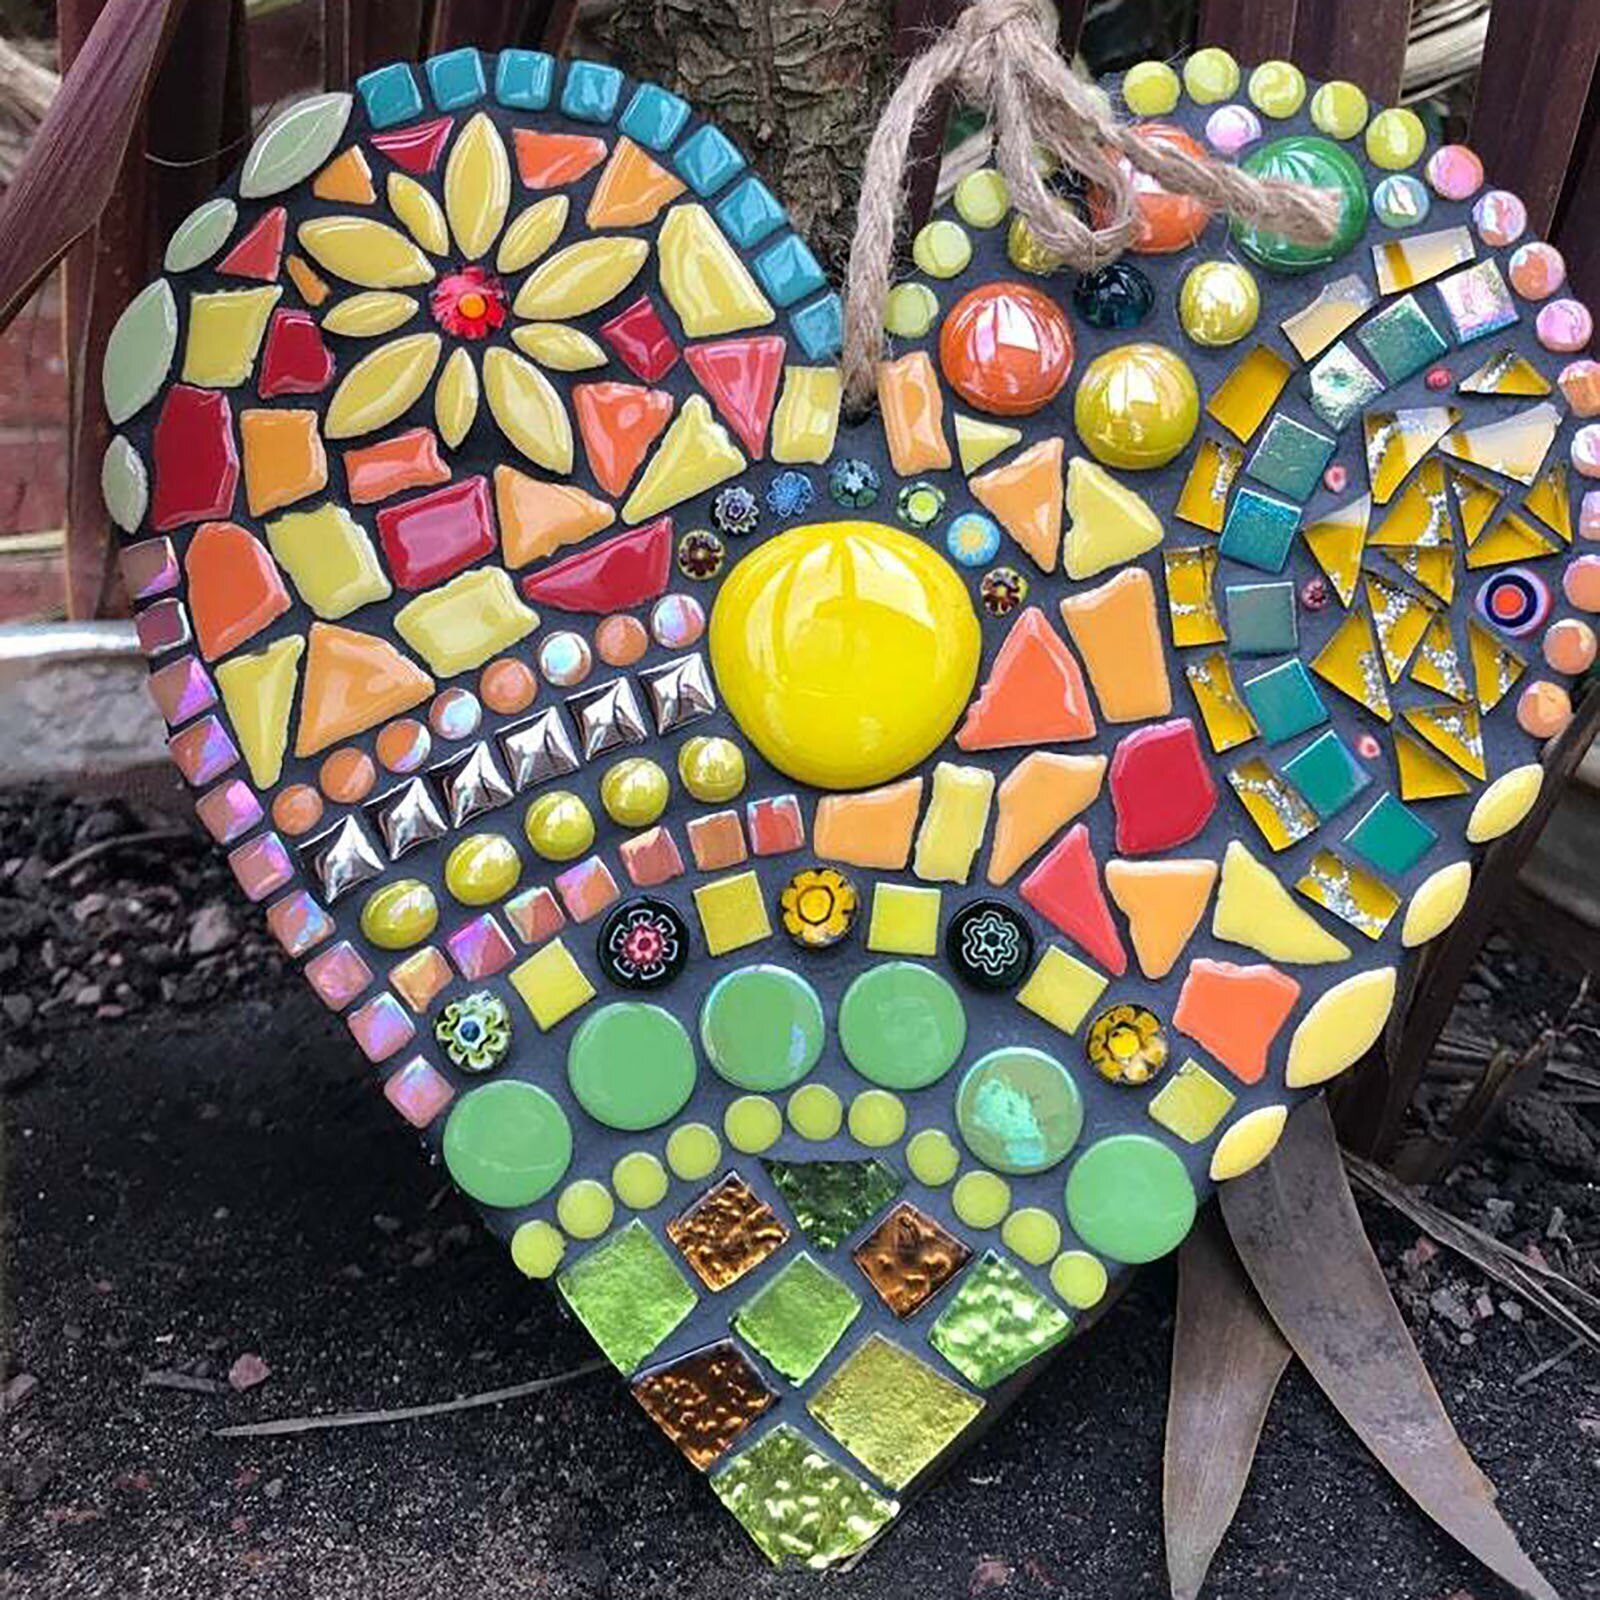 🌲CHRISTMAS HOT SALE🎁Large garden mosaic heart